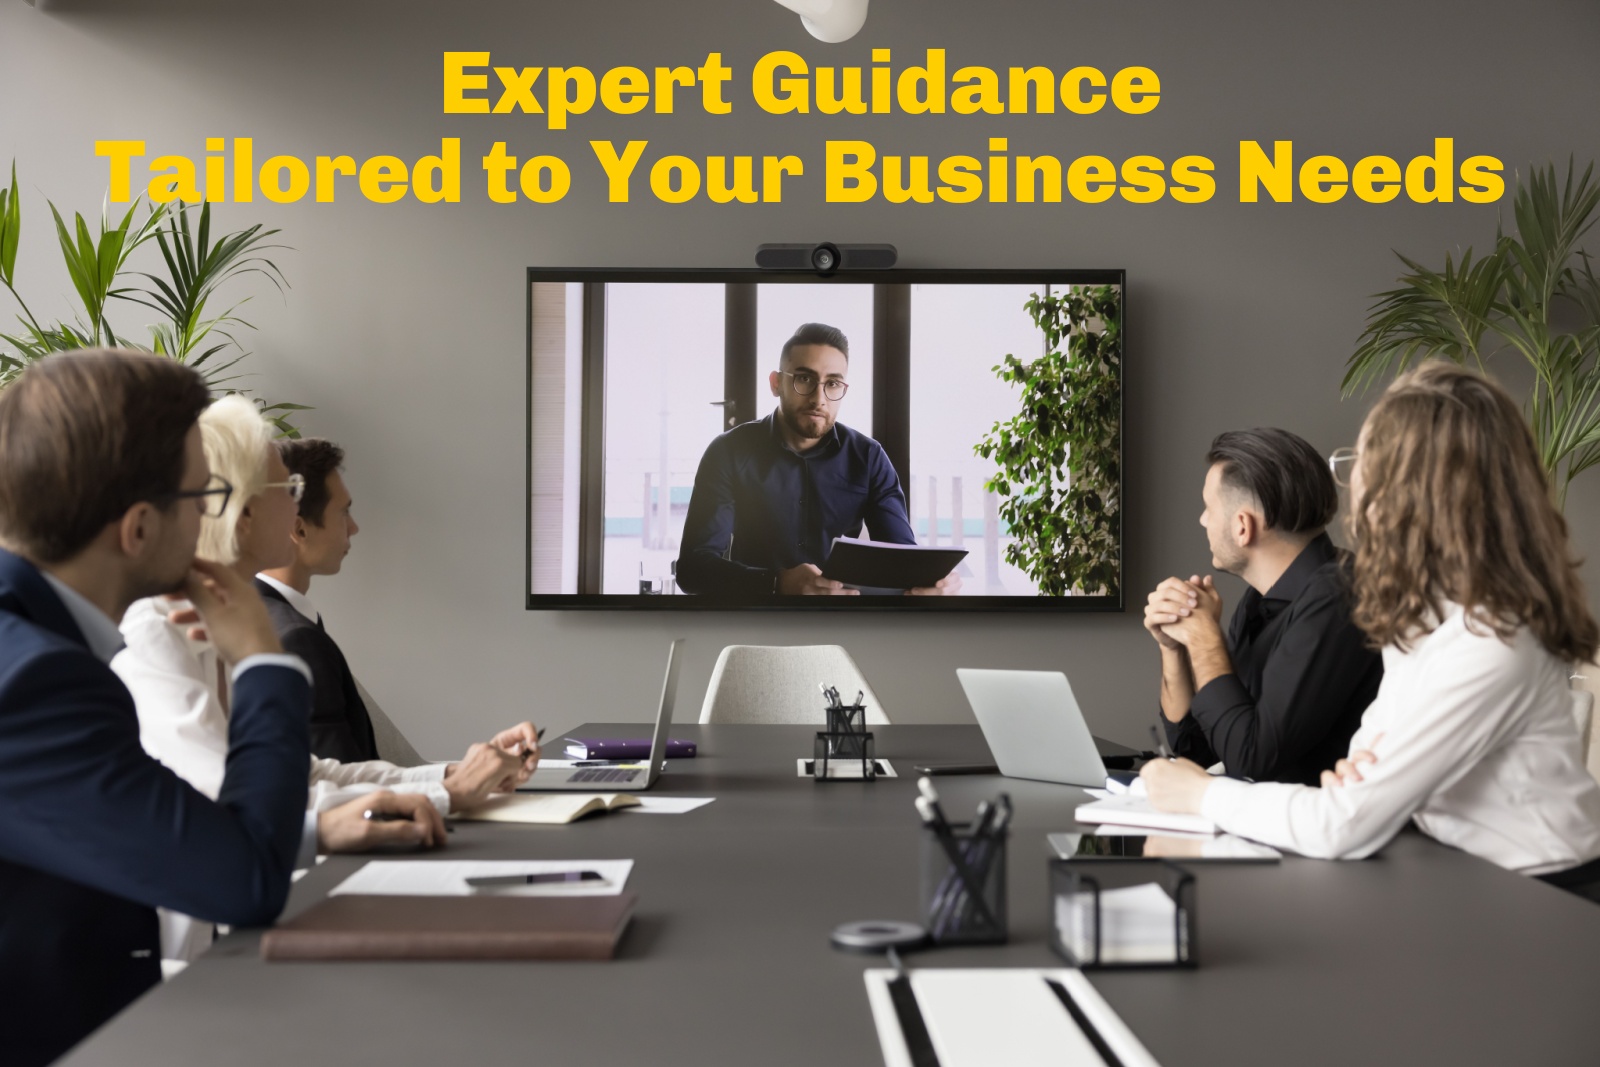 A virtual CISO providing guidance to a client via video conference.